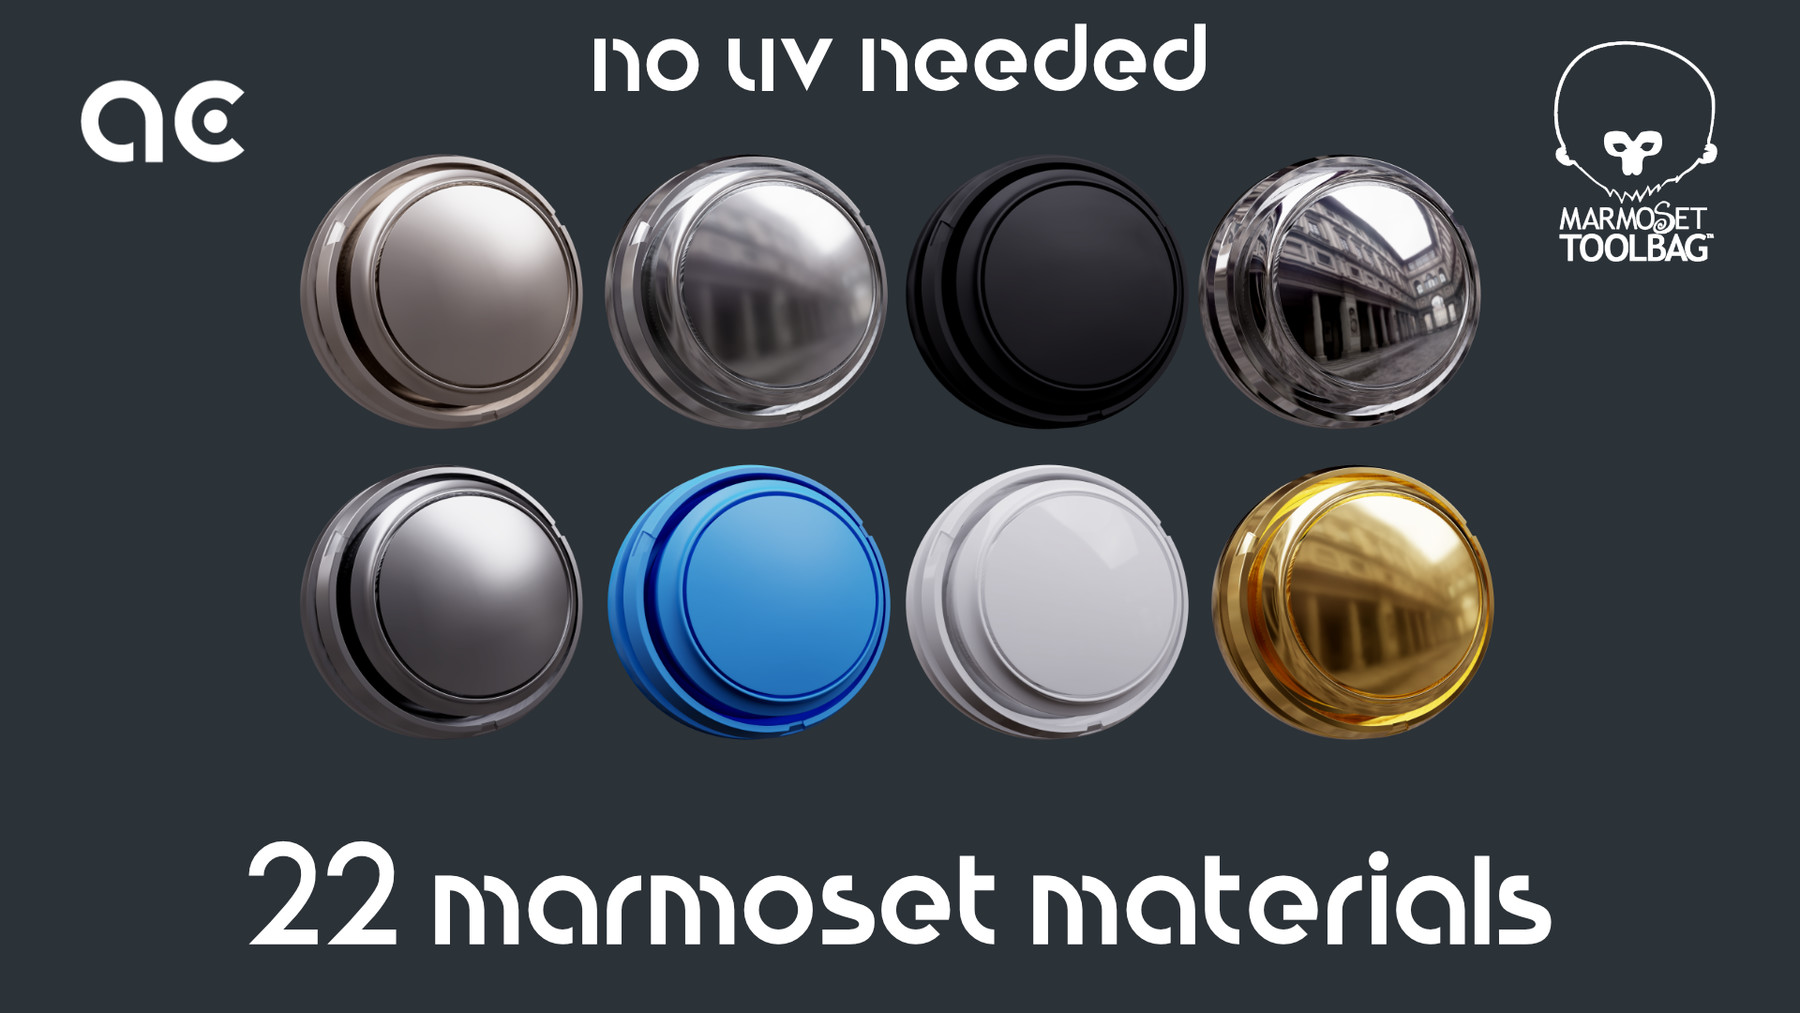 marmoset toolbag 3 materials